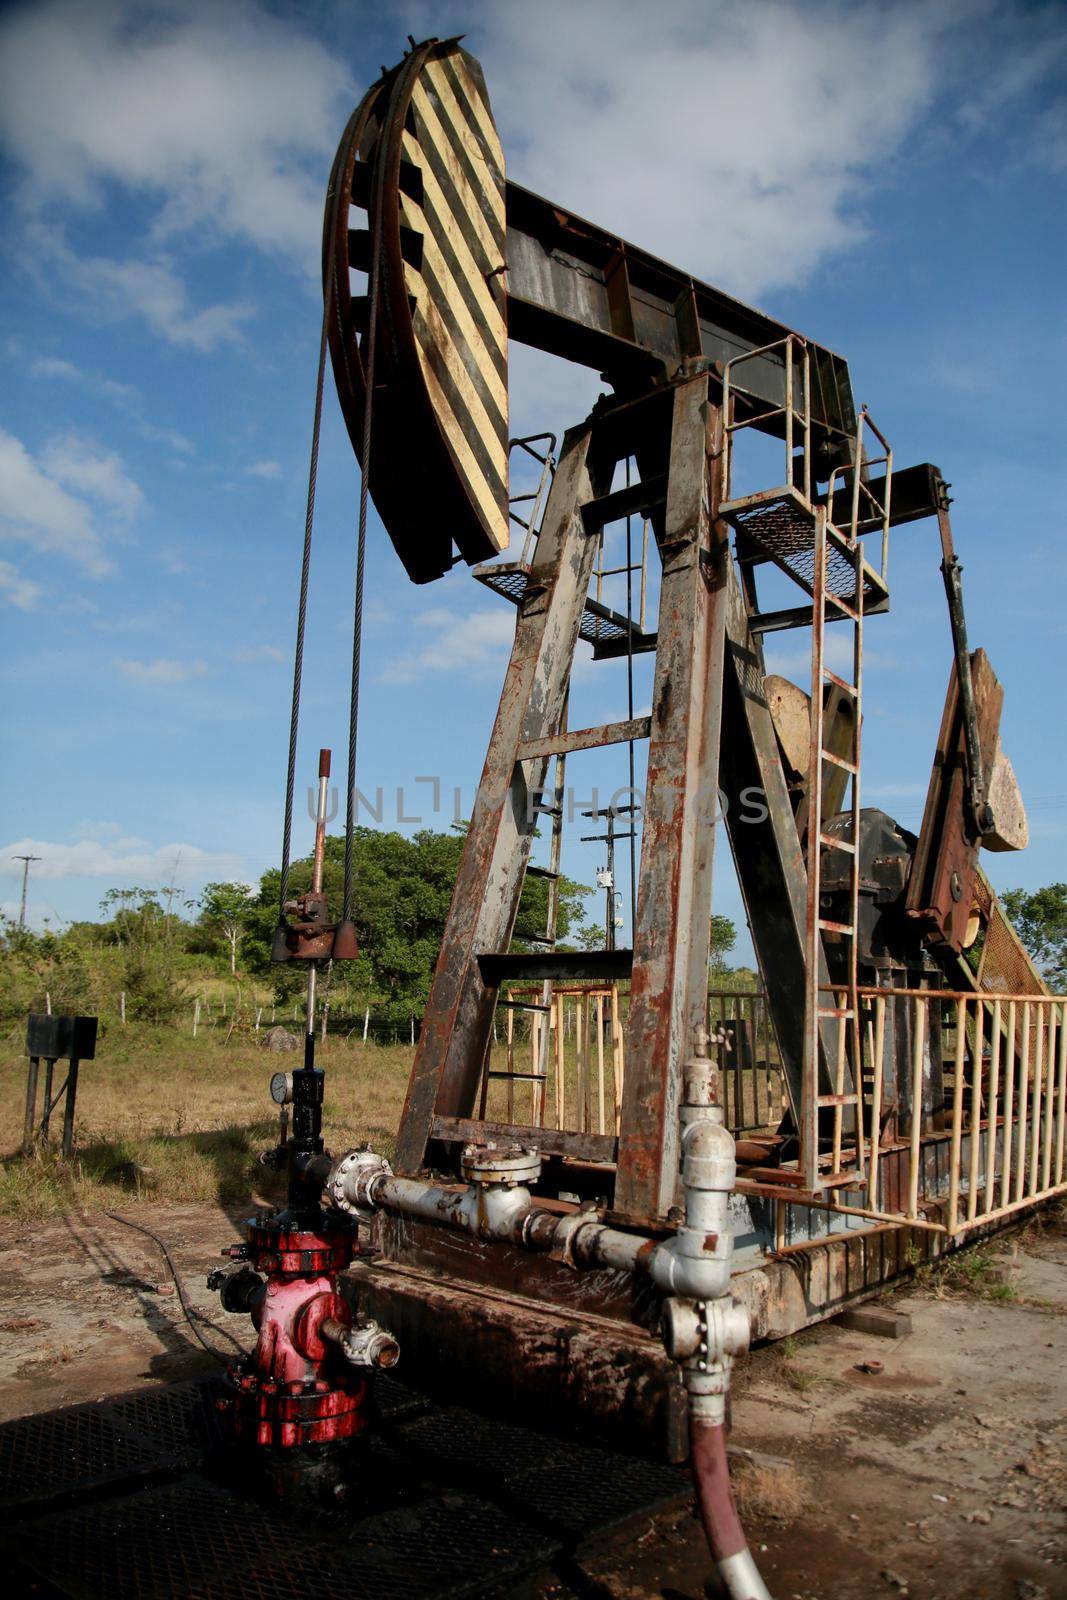 mata de sao joao, bahia / brazil - october 15, 2020: oil exploration machine is seen in Petrobras' field of action in the city of Mata de Sao Joao.